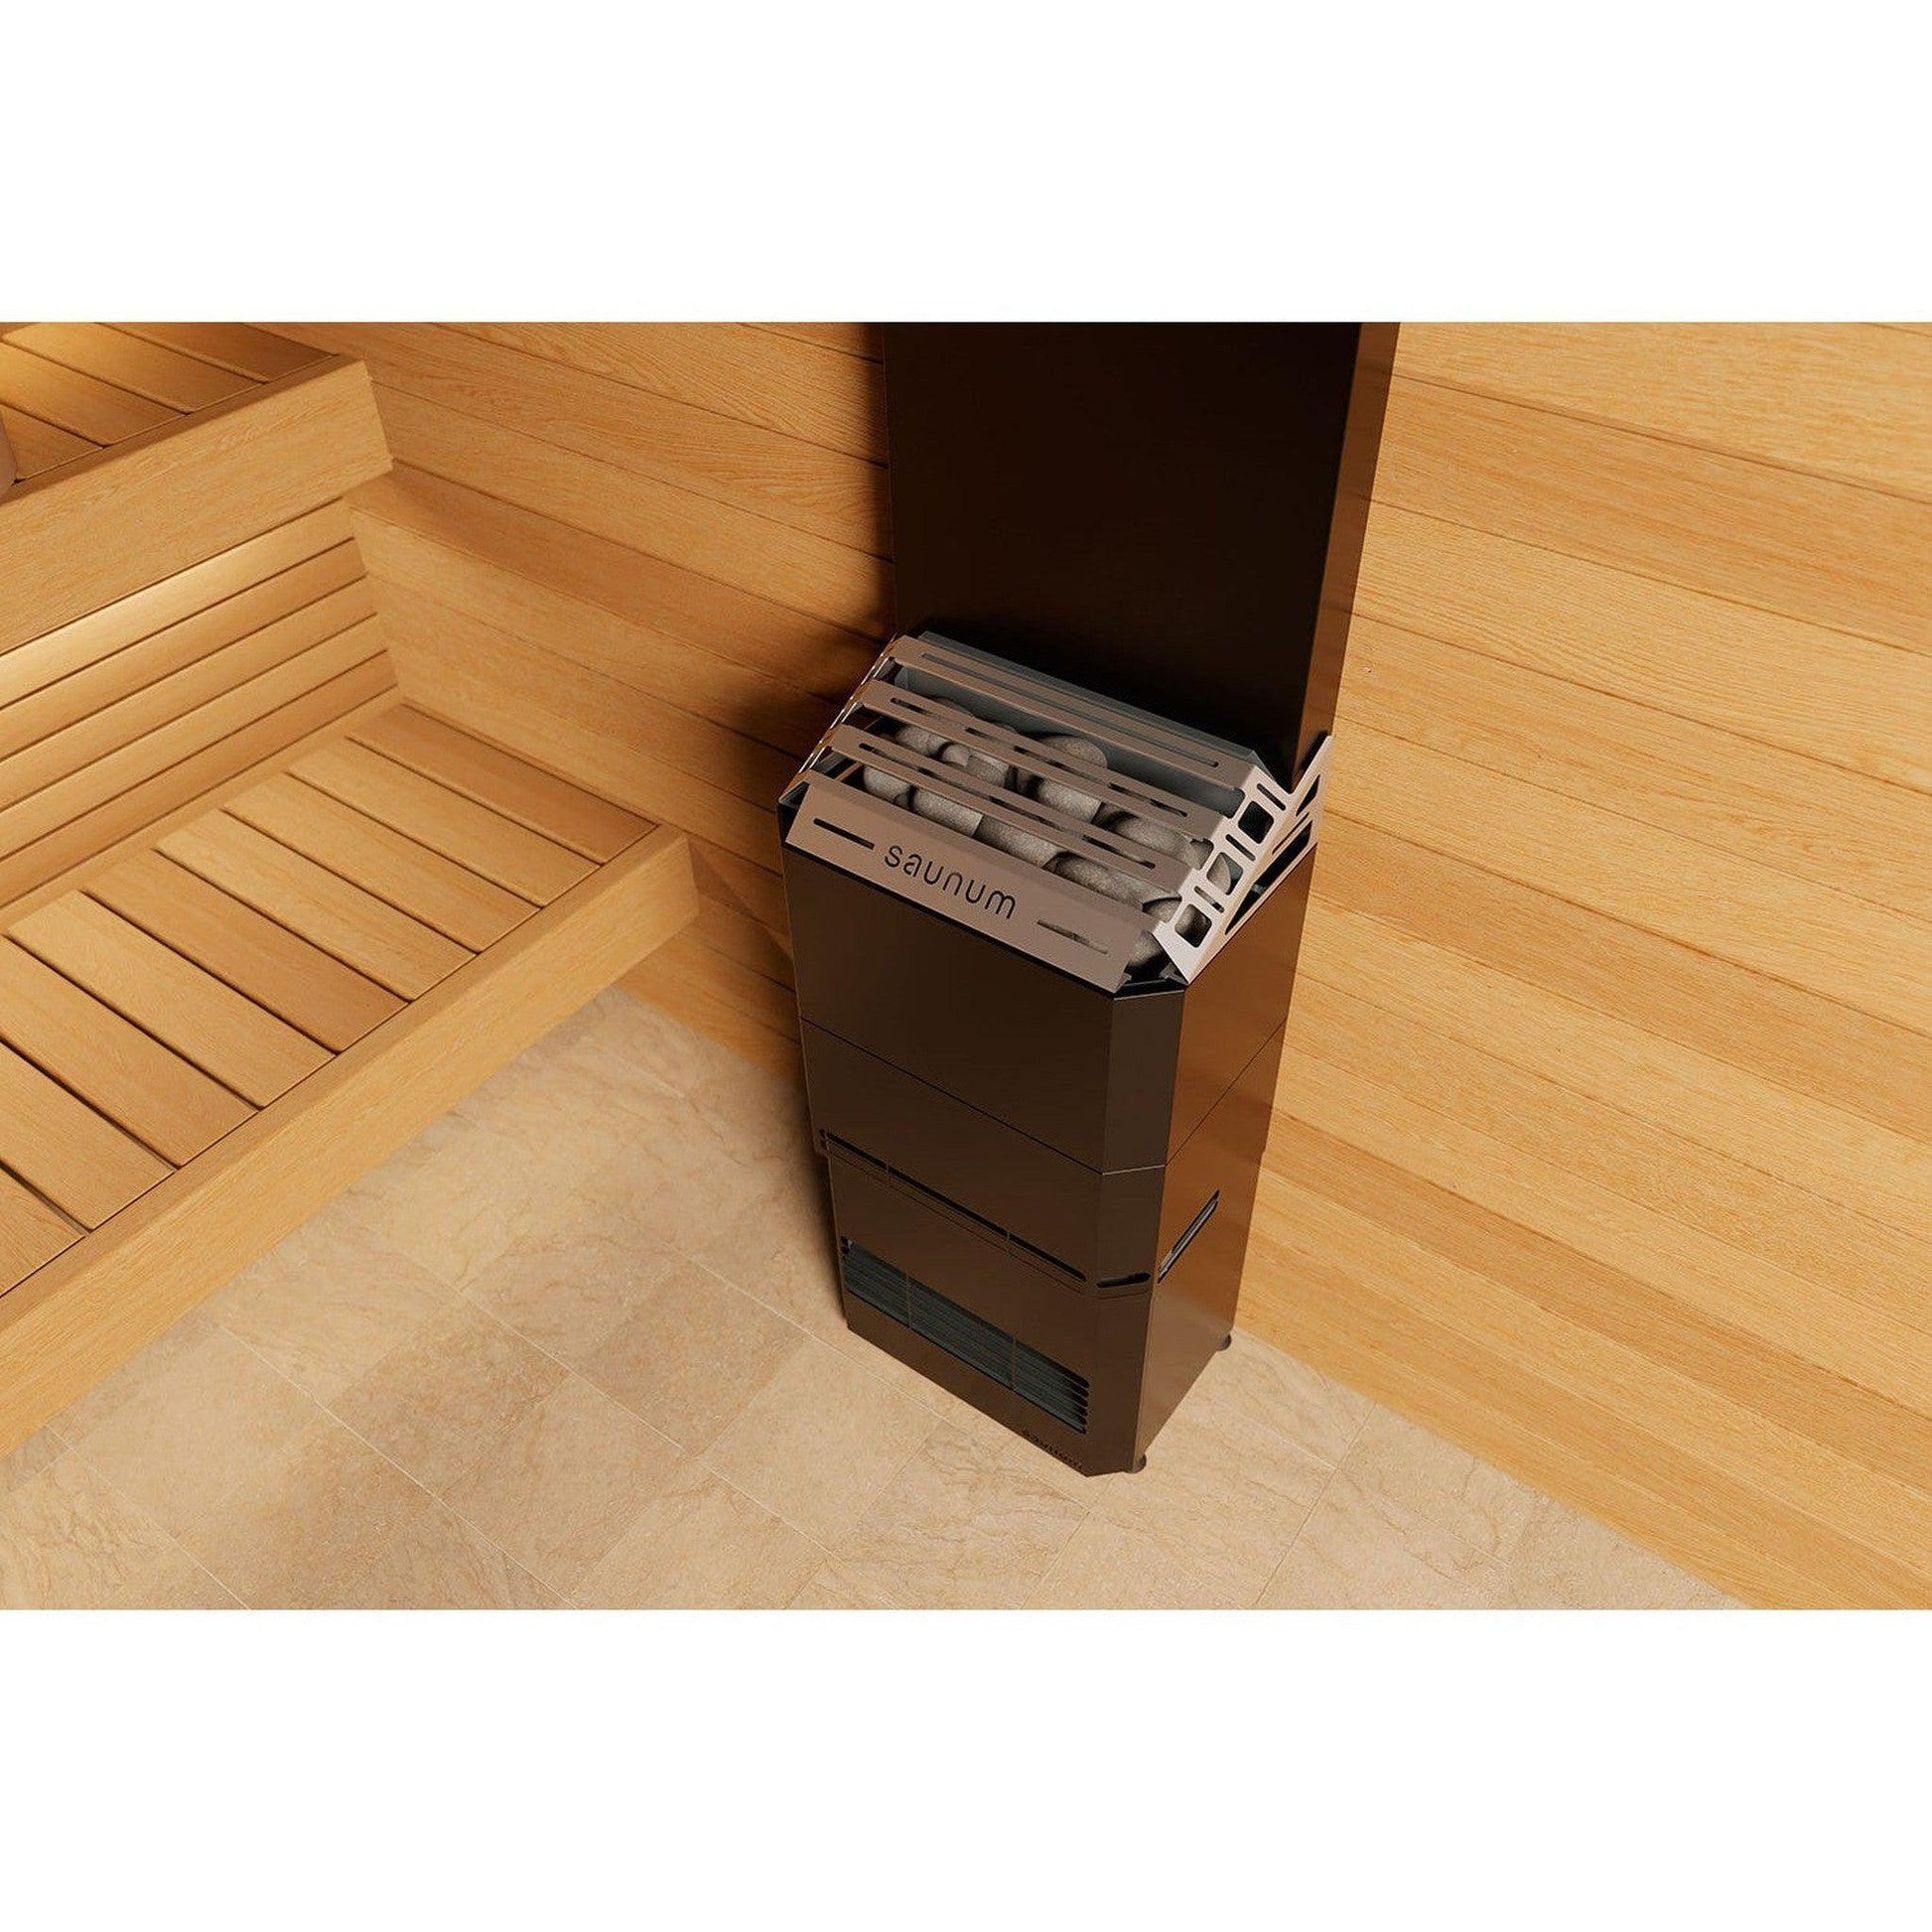 Saunum Air 10 Nordic Black / Anthracite Grey 9.6kW Sauna Heater with Climate Equalizer